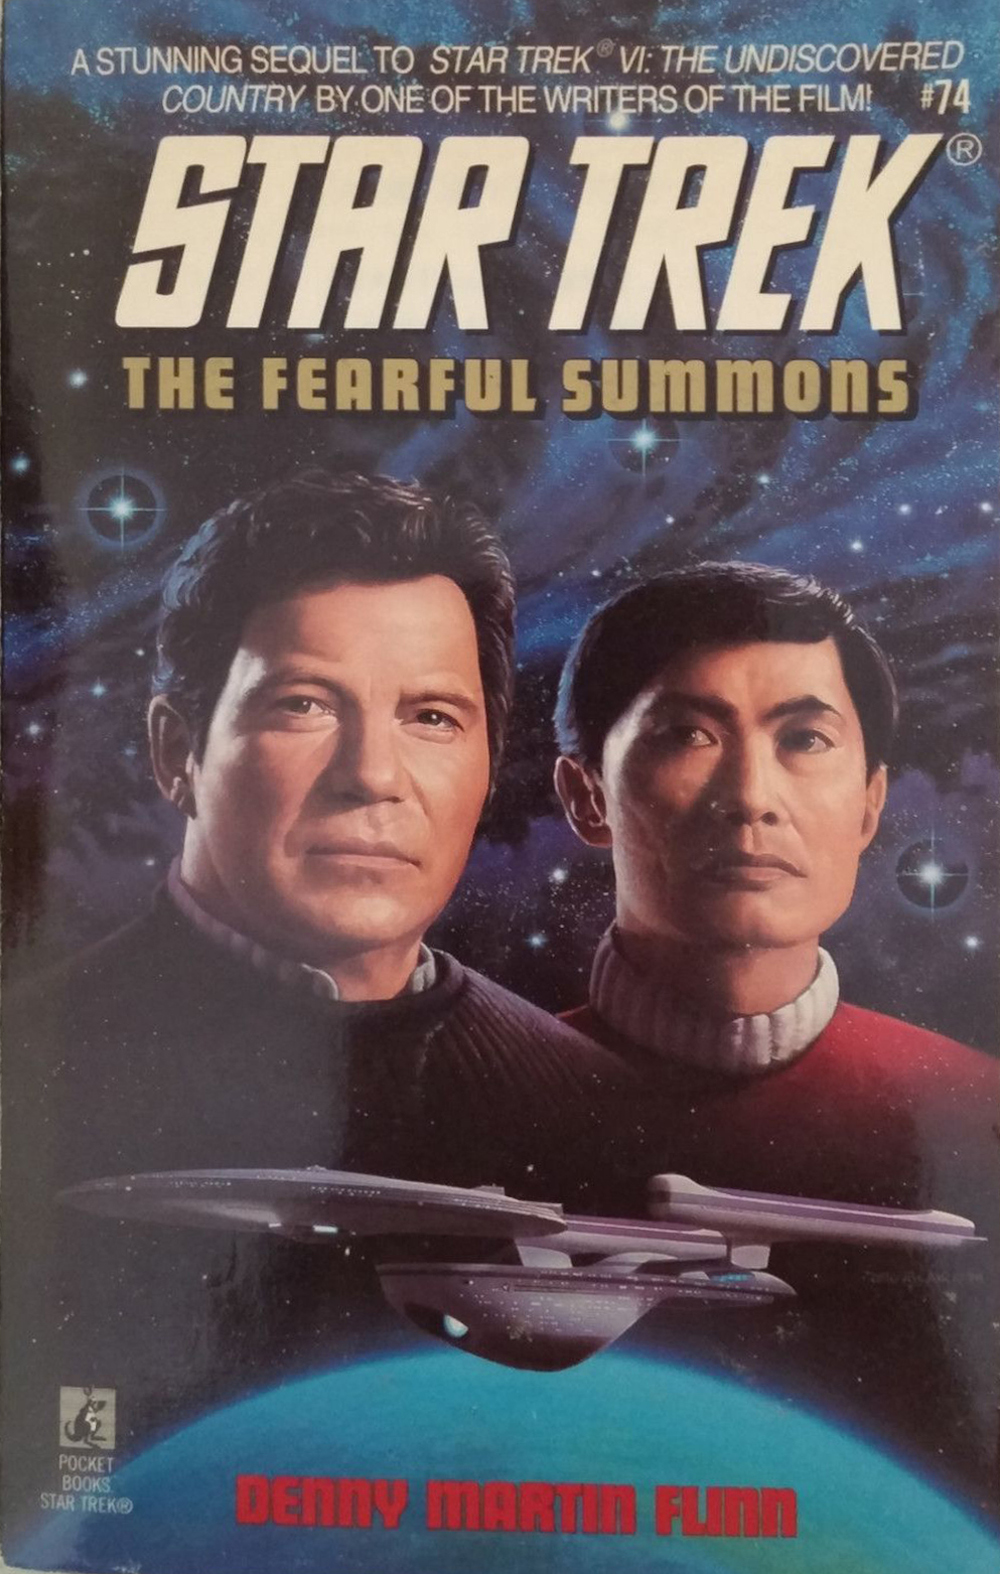 The Fearful Summons (Jun 1995)